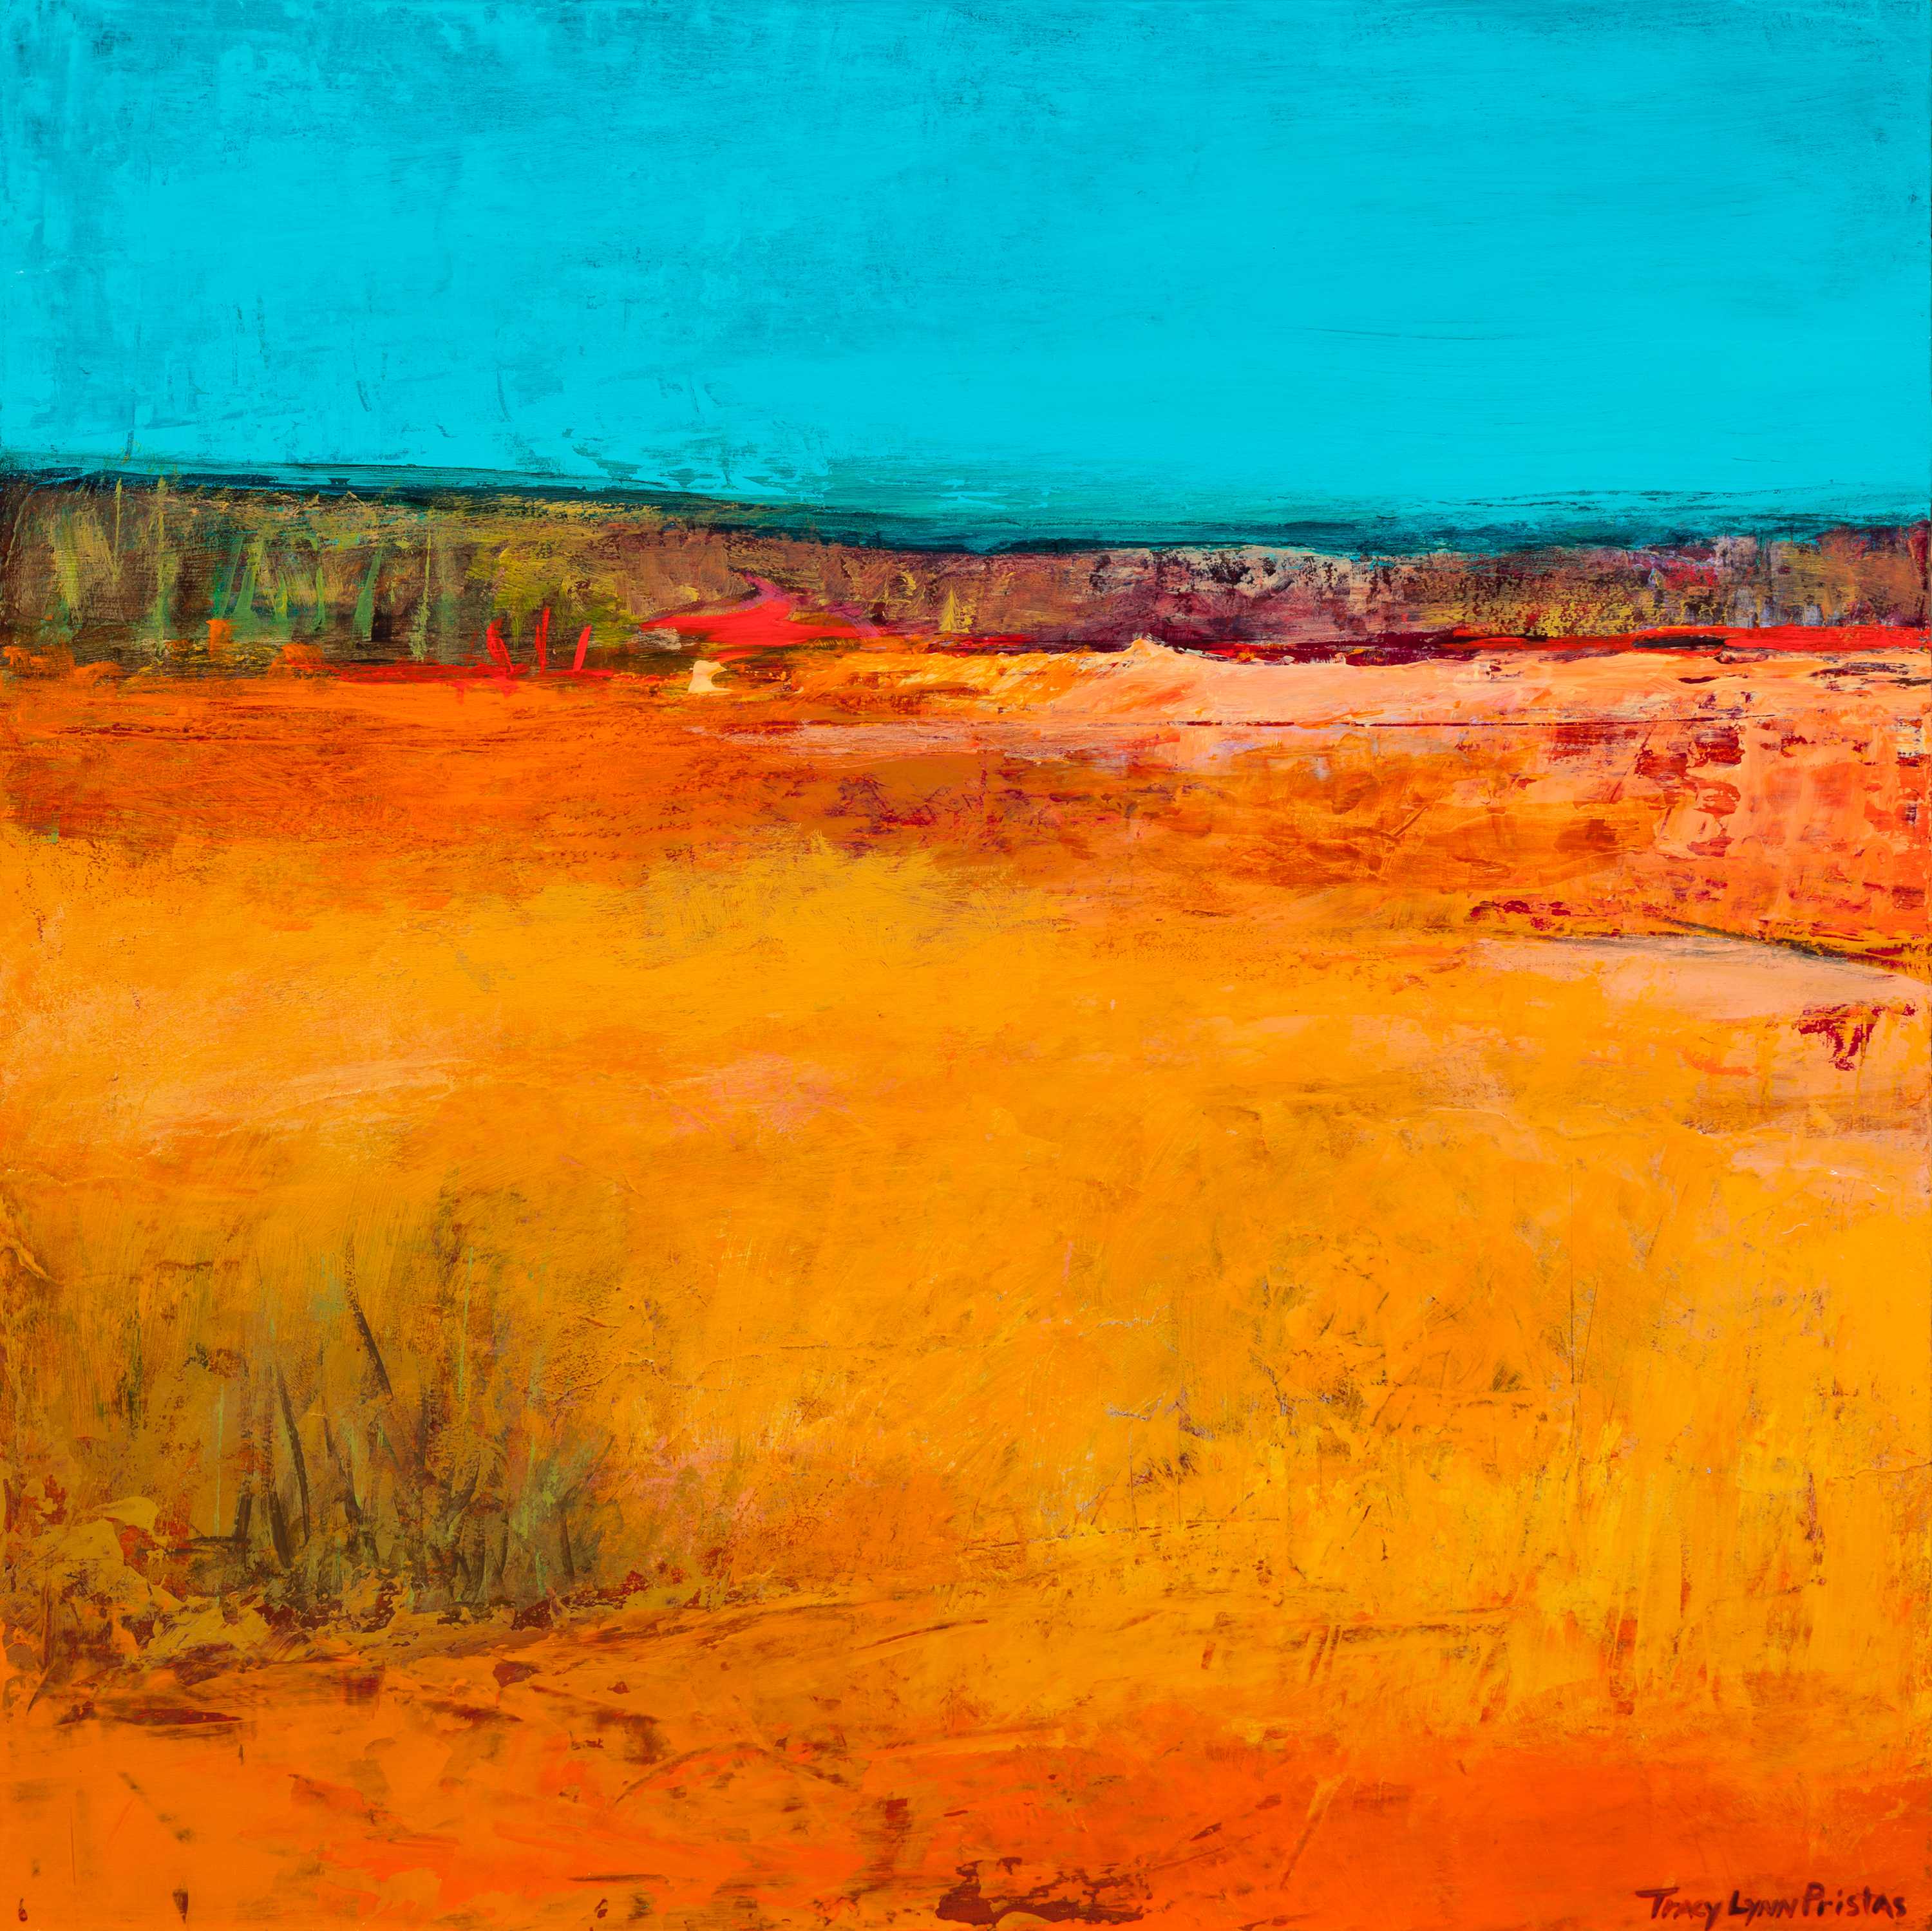 Tracy lynn pristas abstract landscape paintings original playa artist residency zpdktb